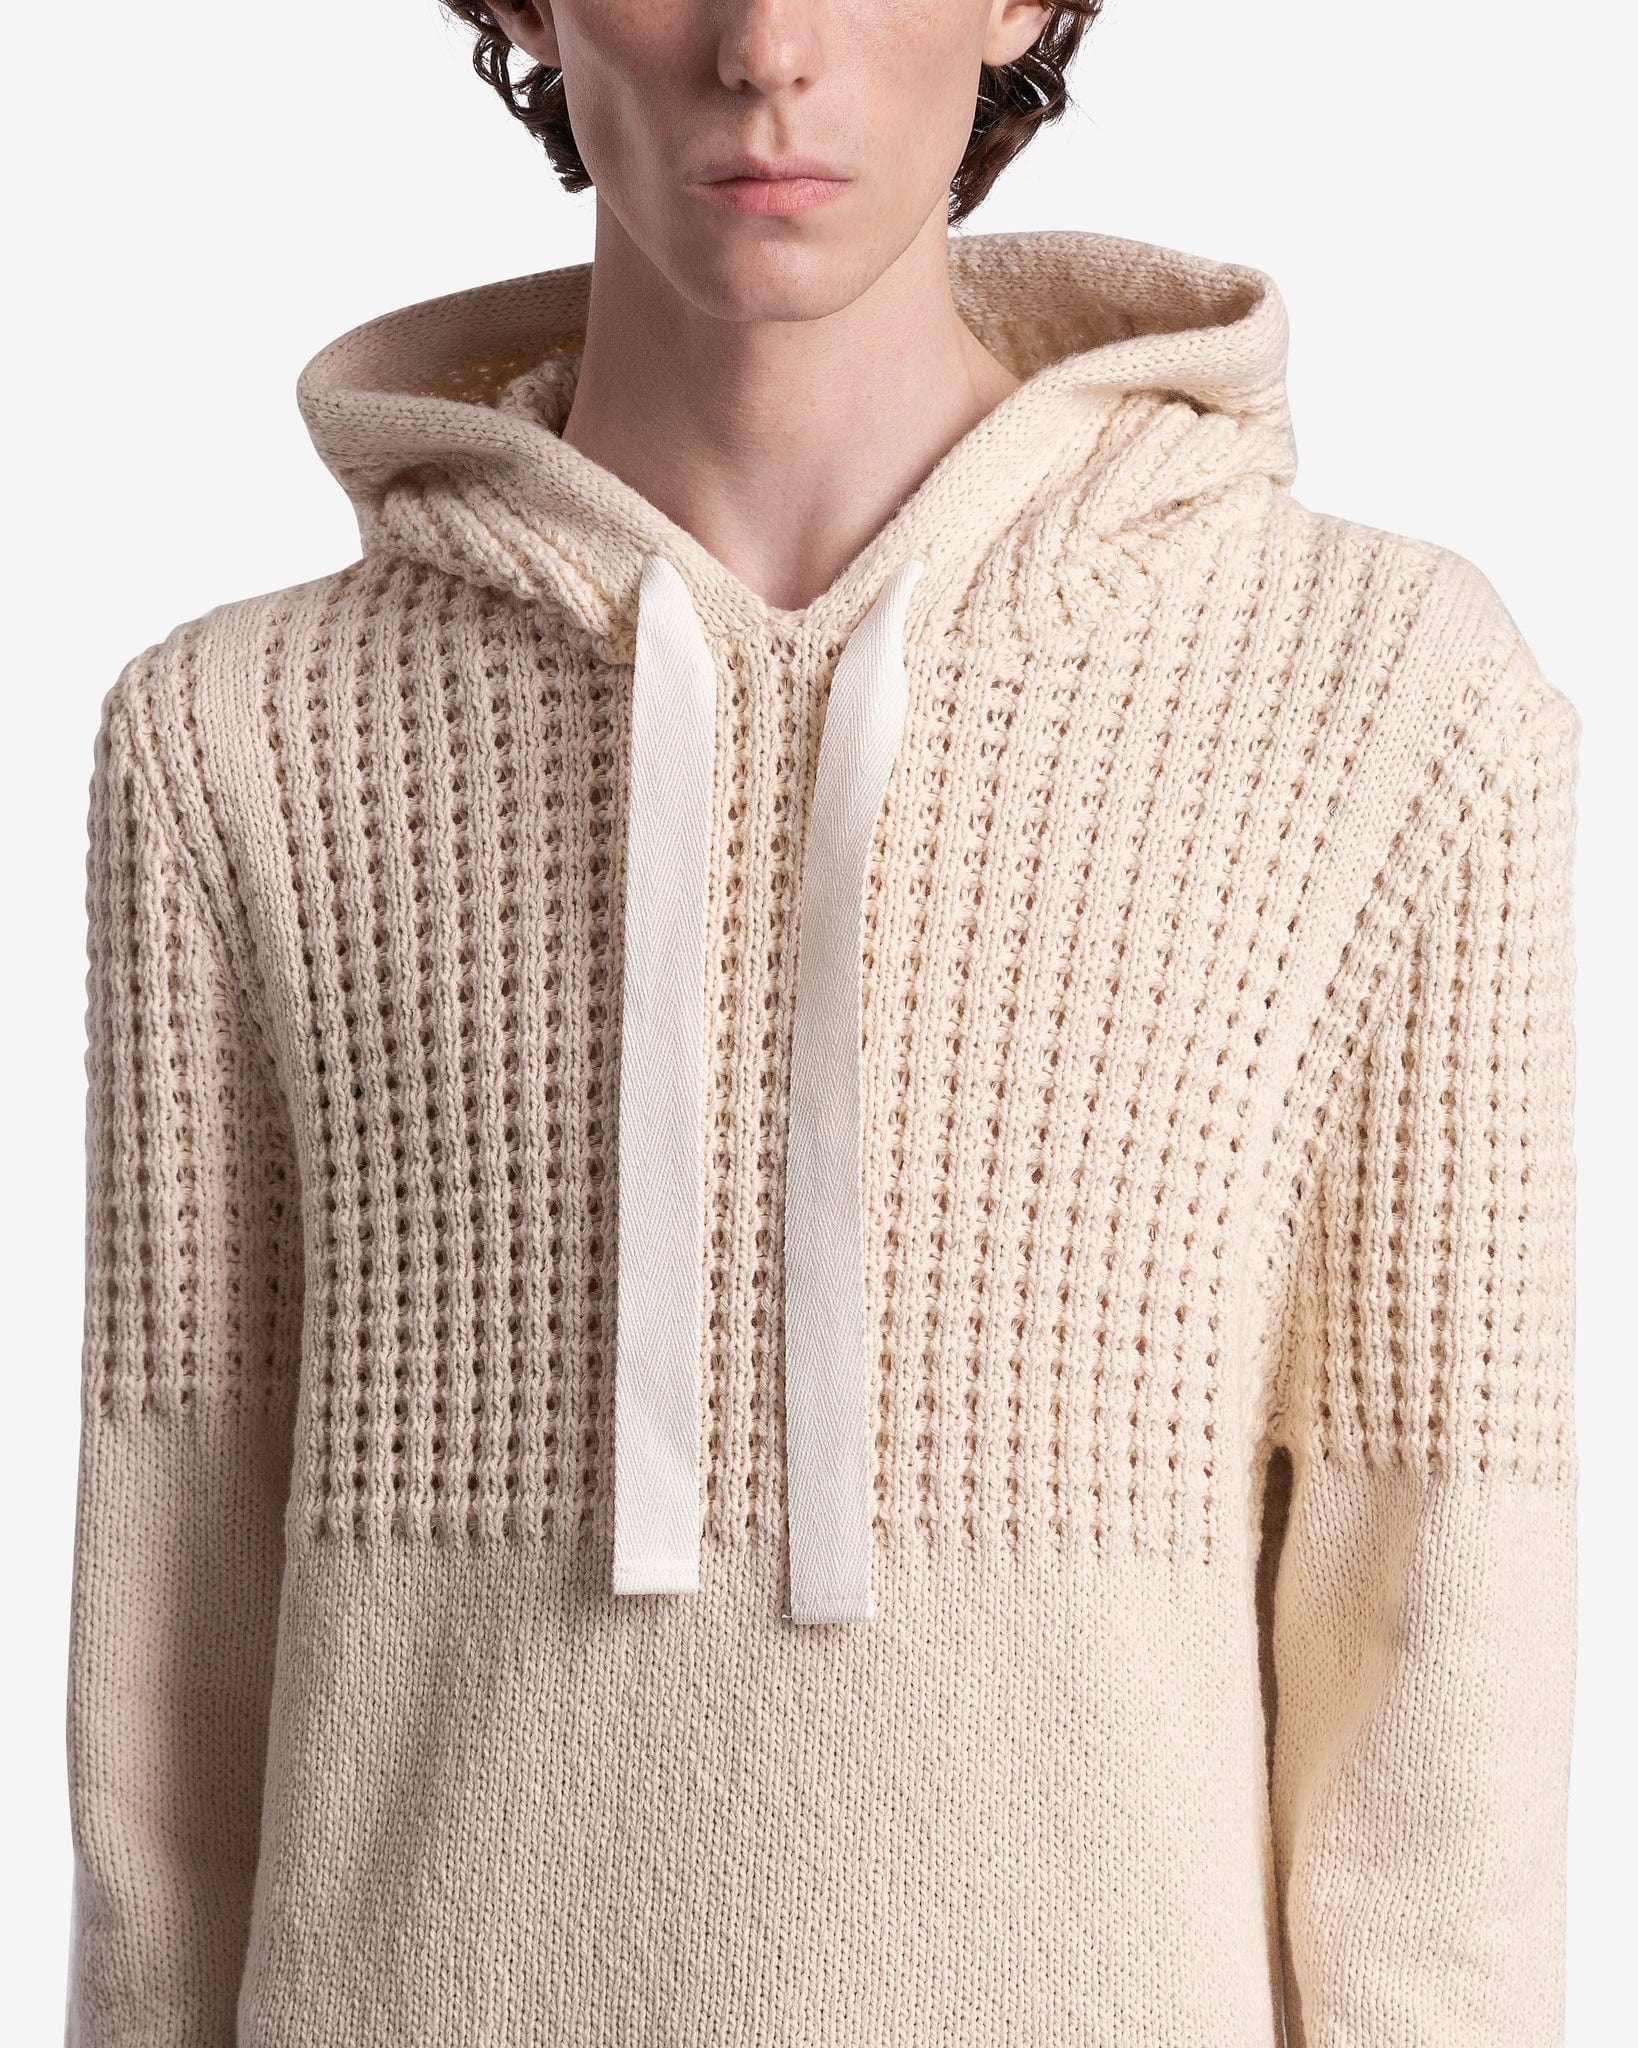 Jil Sander Men's Sweater Chunky Cotton Wool Hoodie in Natural